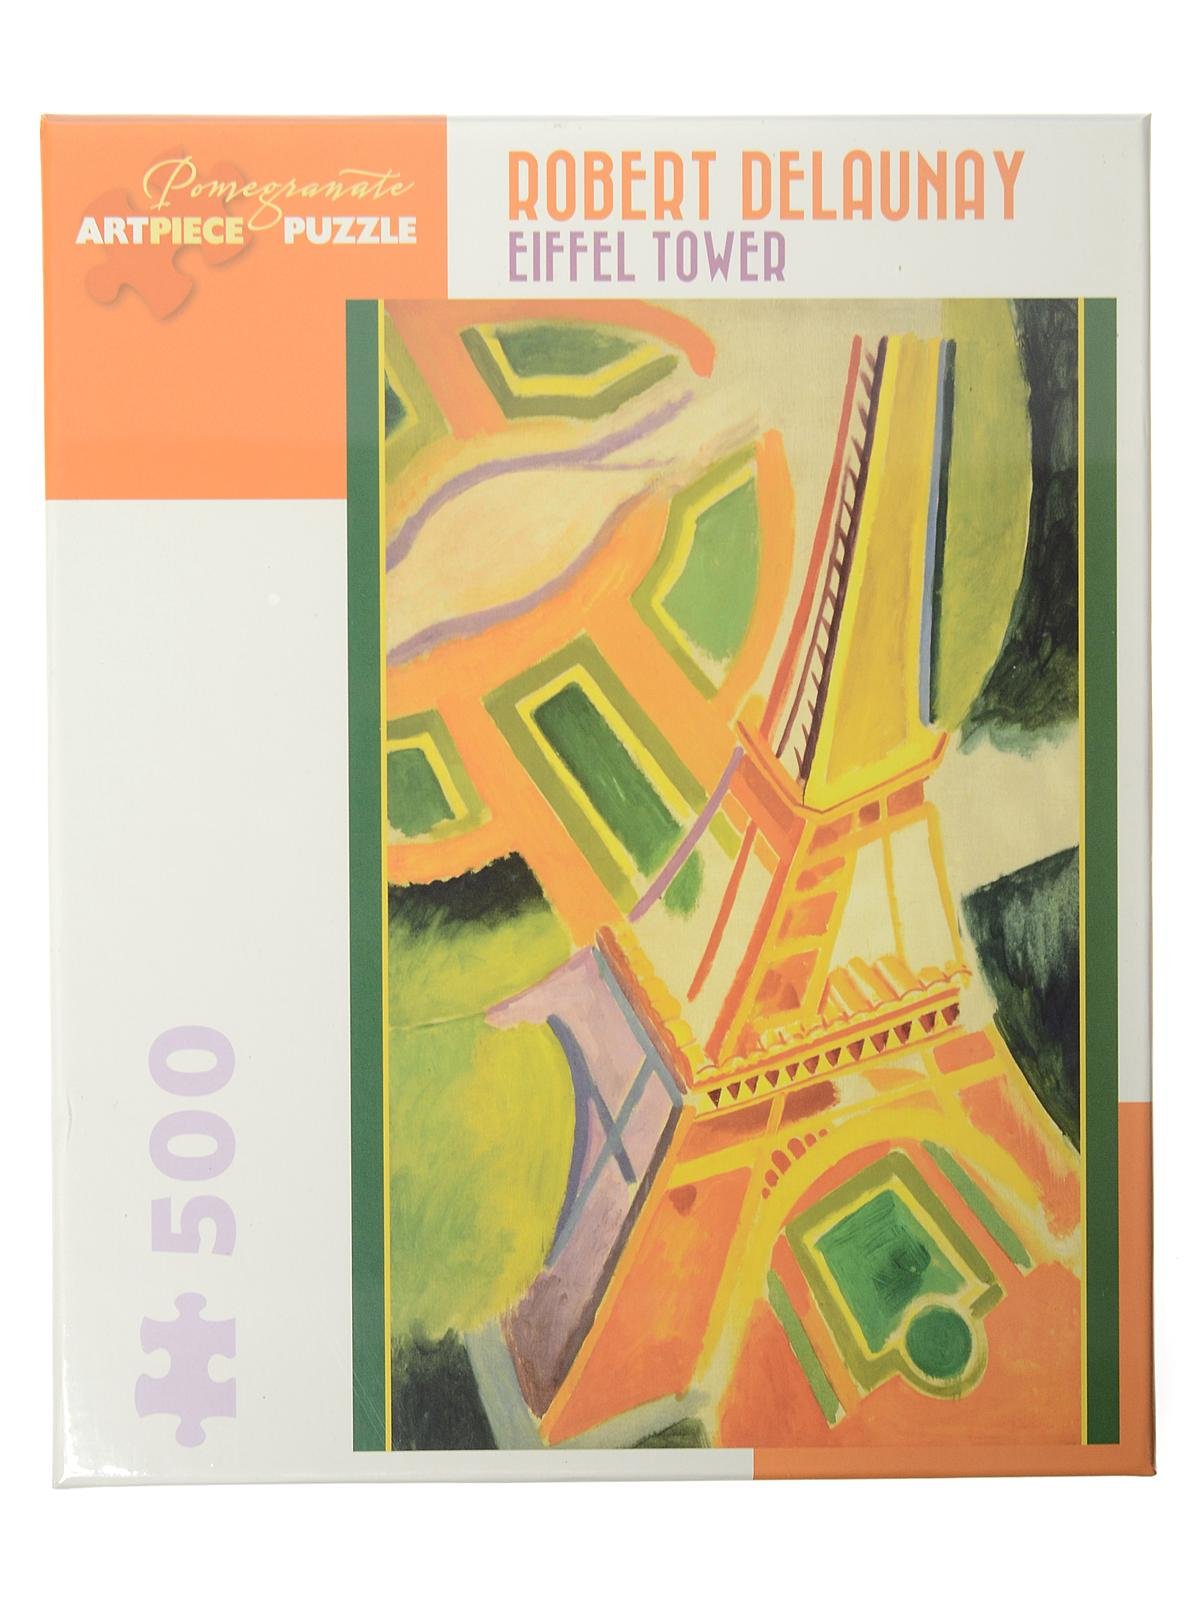 Robert Delaunay: Eiffel Tower